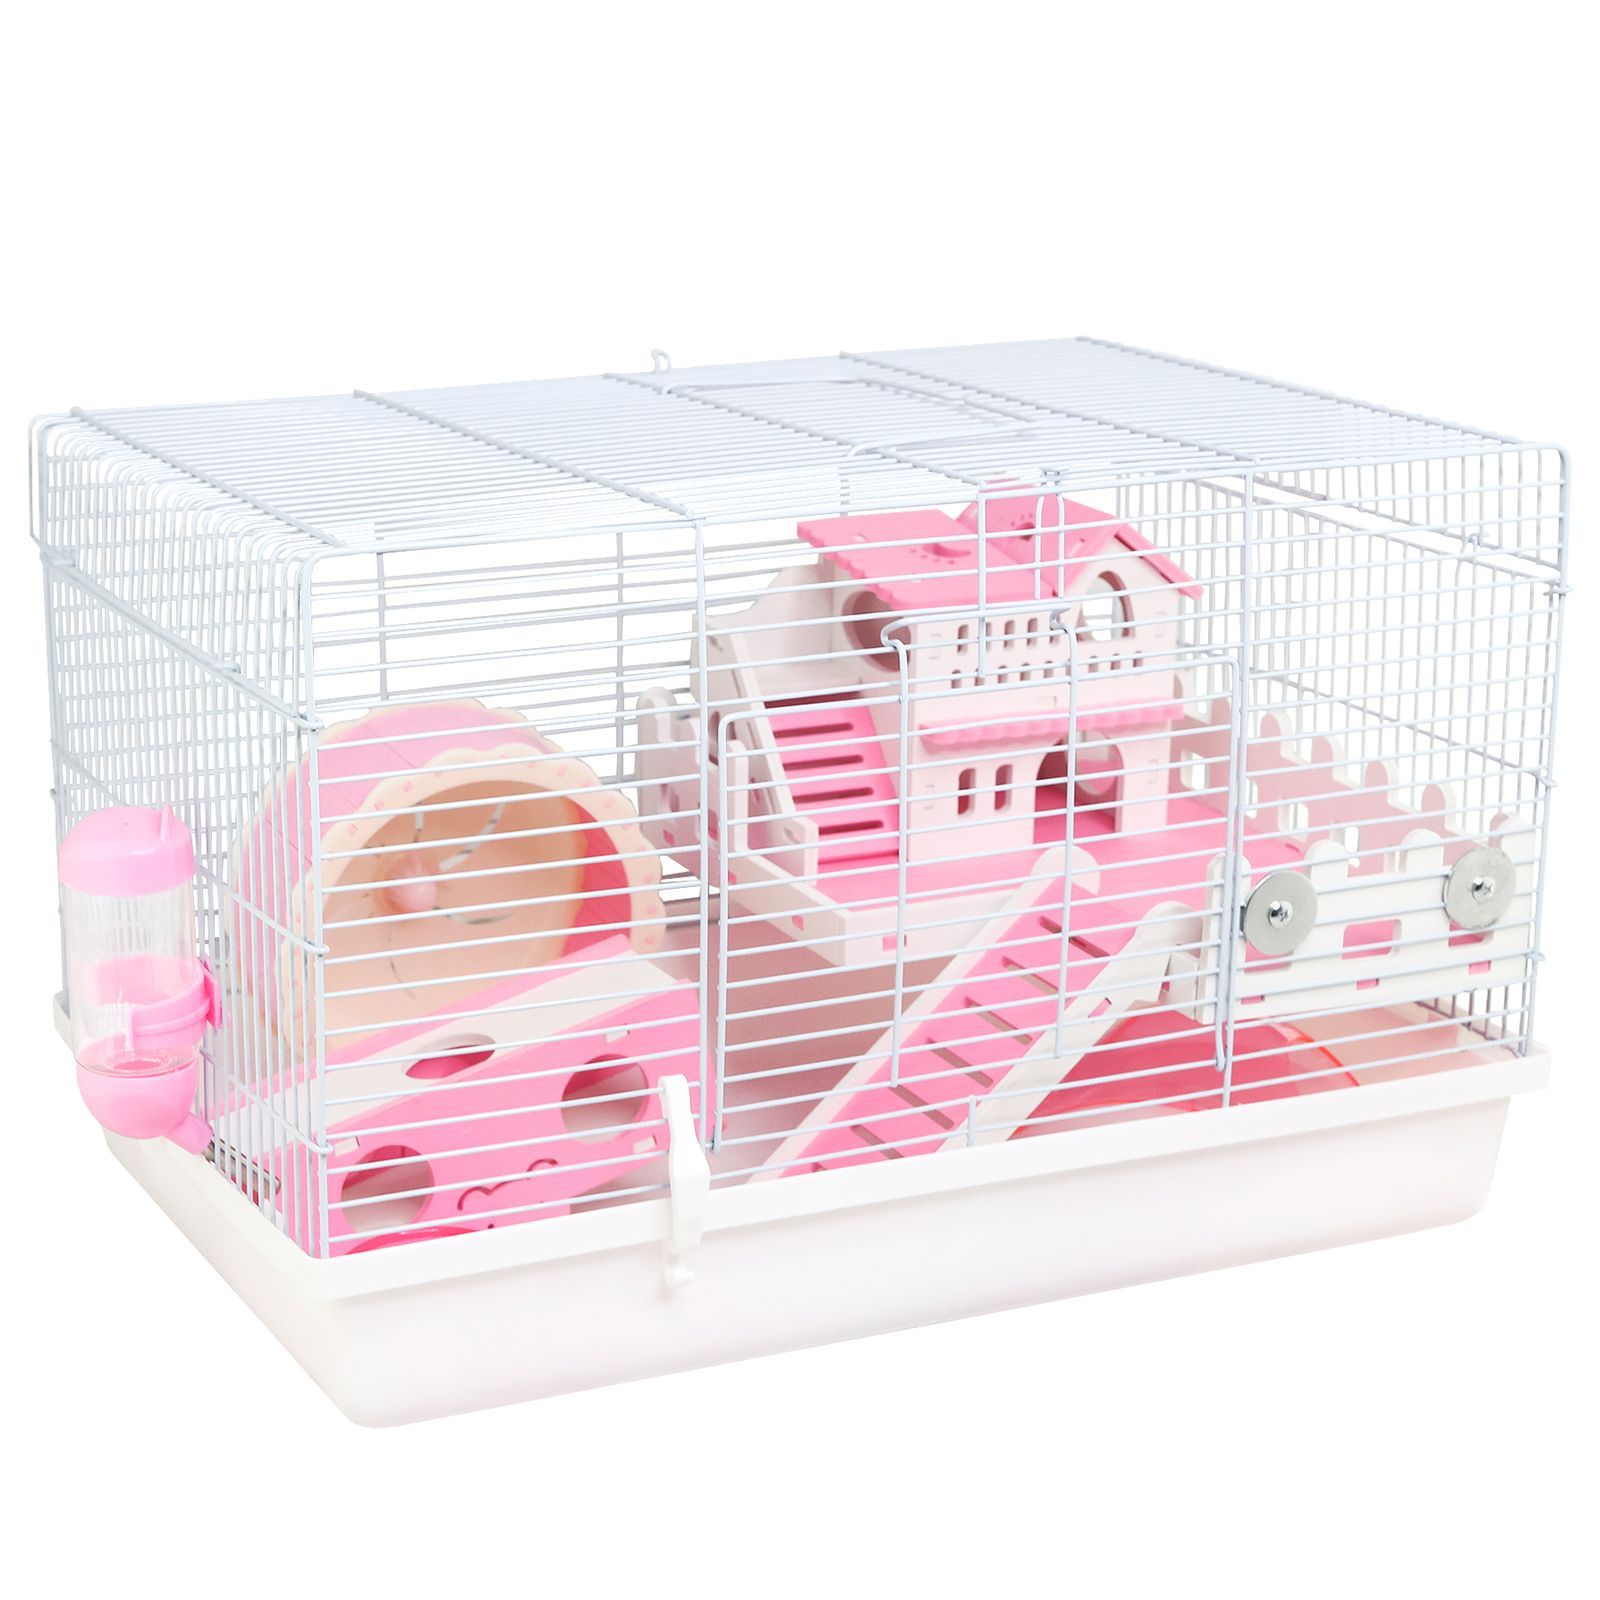 Клетка для грызунов Не Один Дома Pink house, белый, металл, пластик, 47х30х30 см